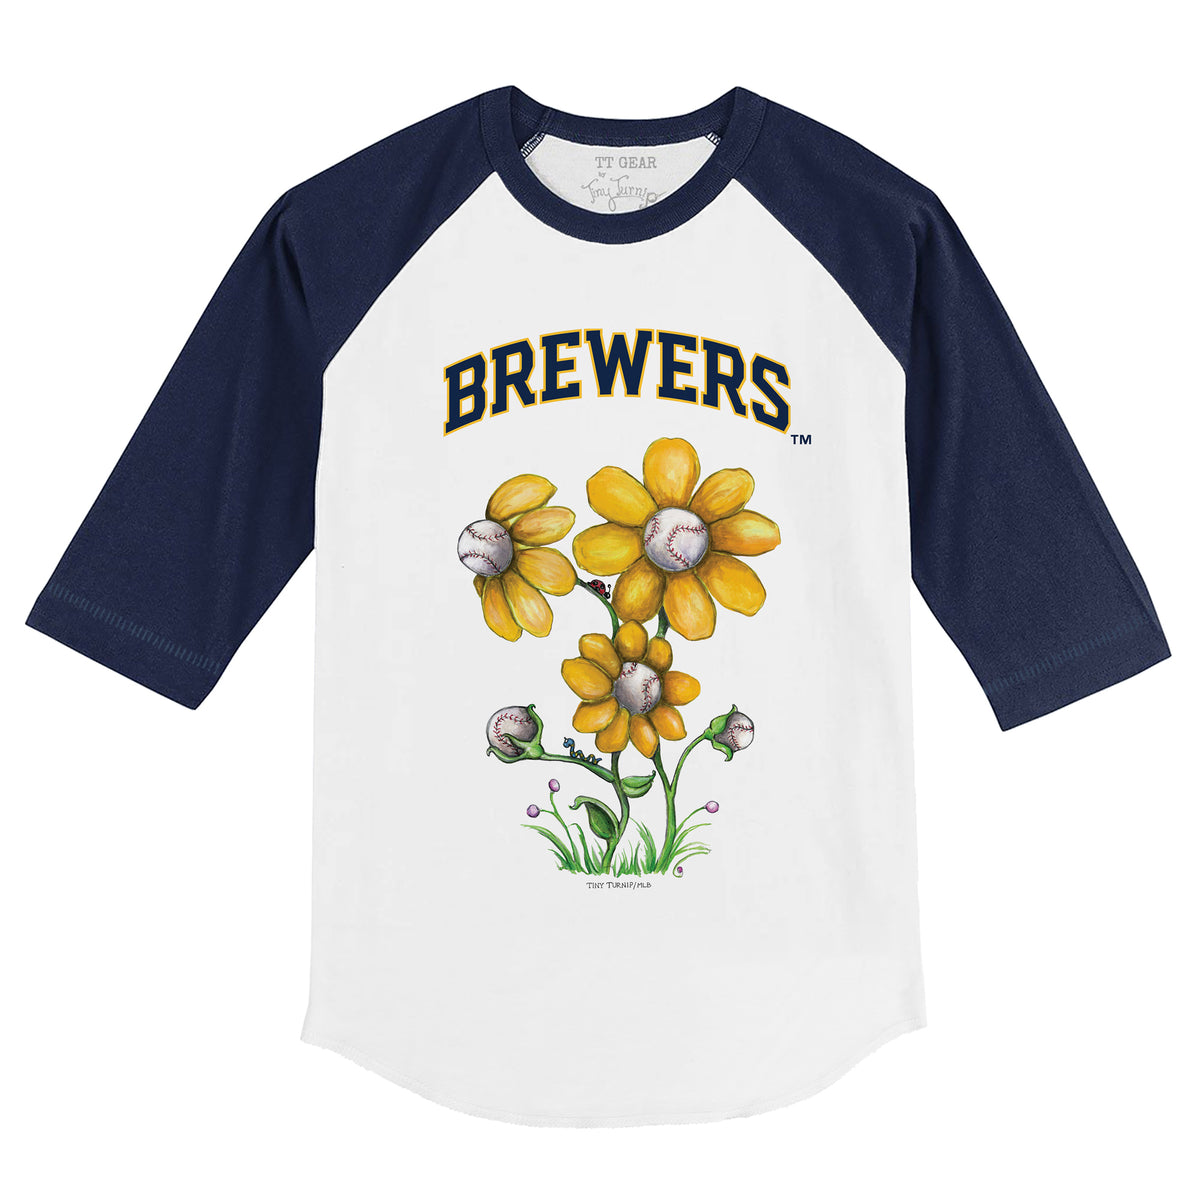 Youth Tiny Turnip Navy Milwaukee Brewers Spit Ball T-Shirt